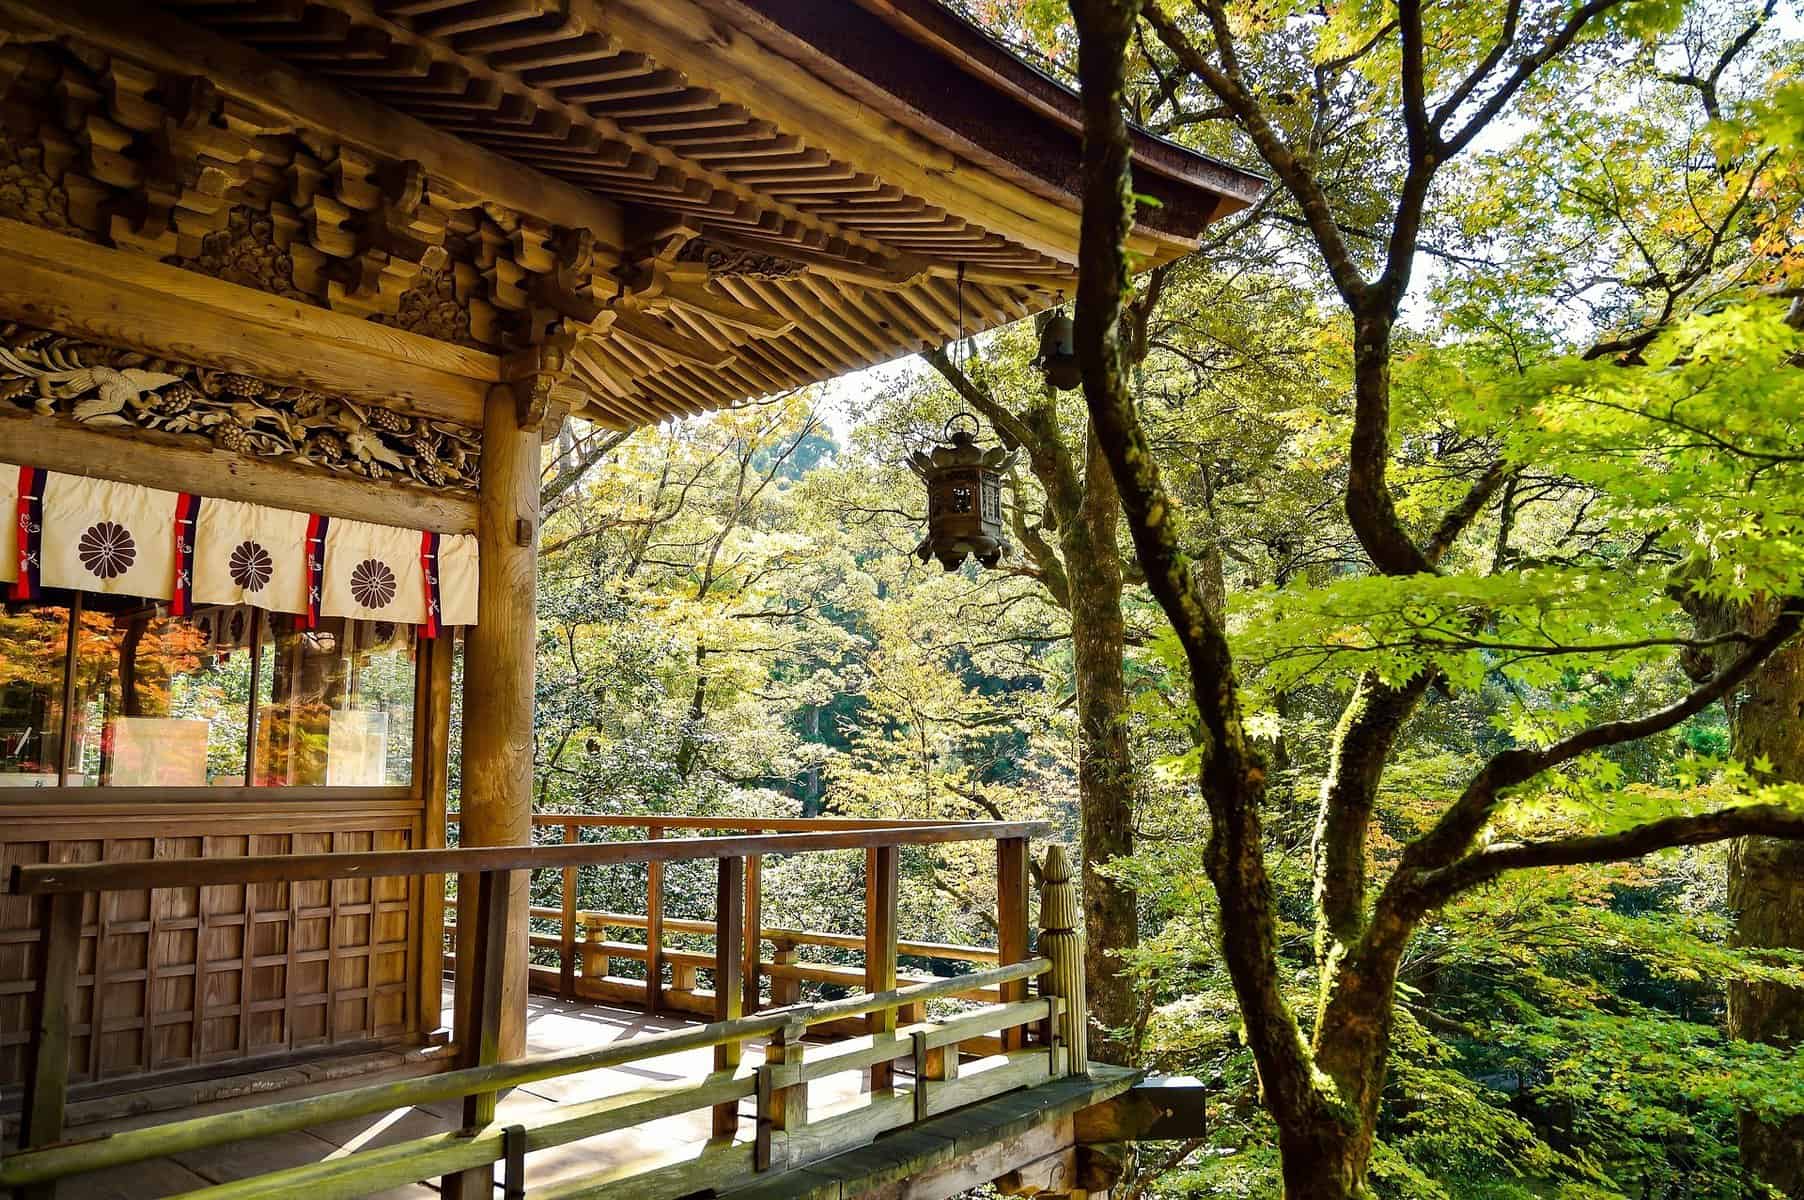 Japanese temple 2